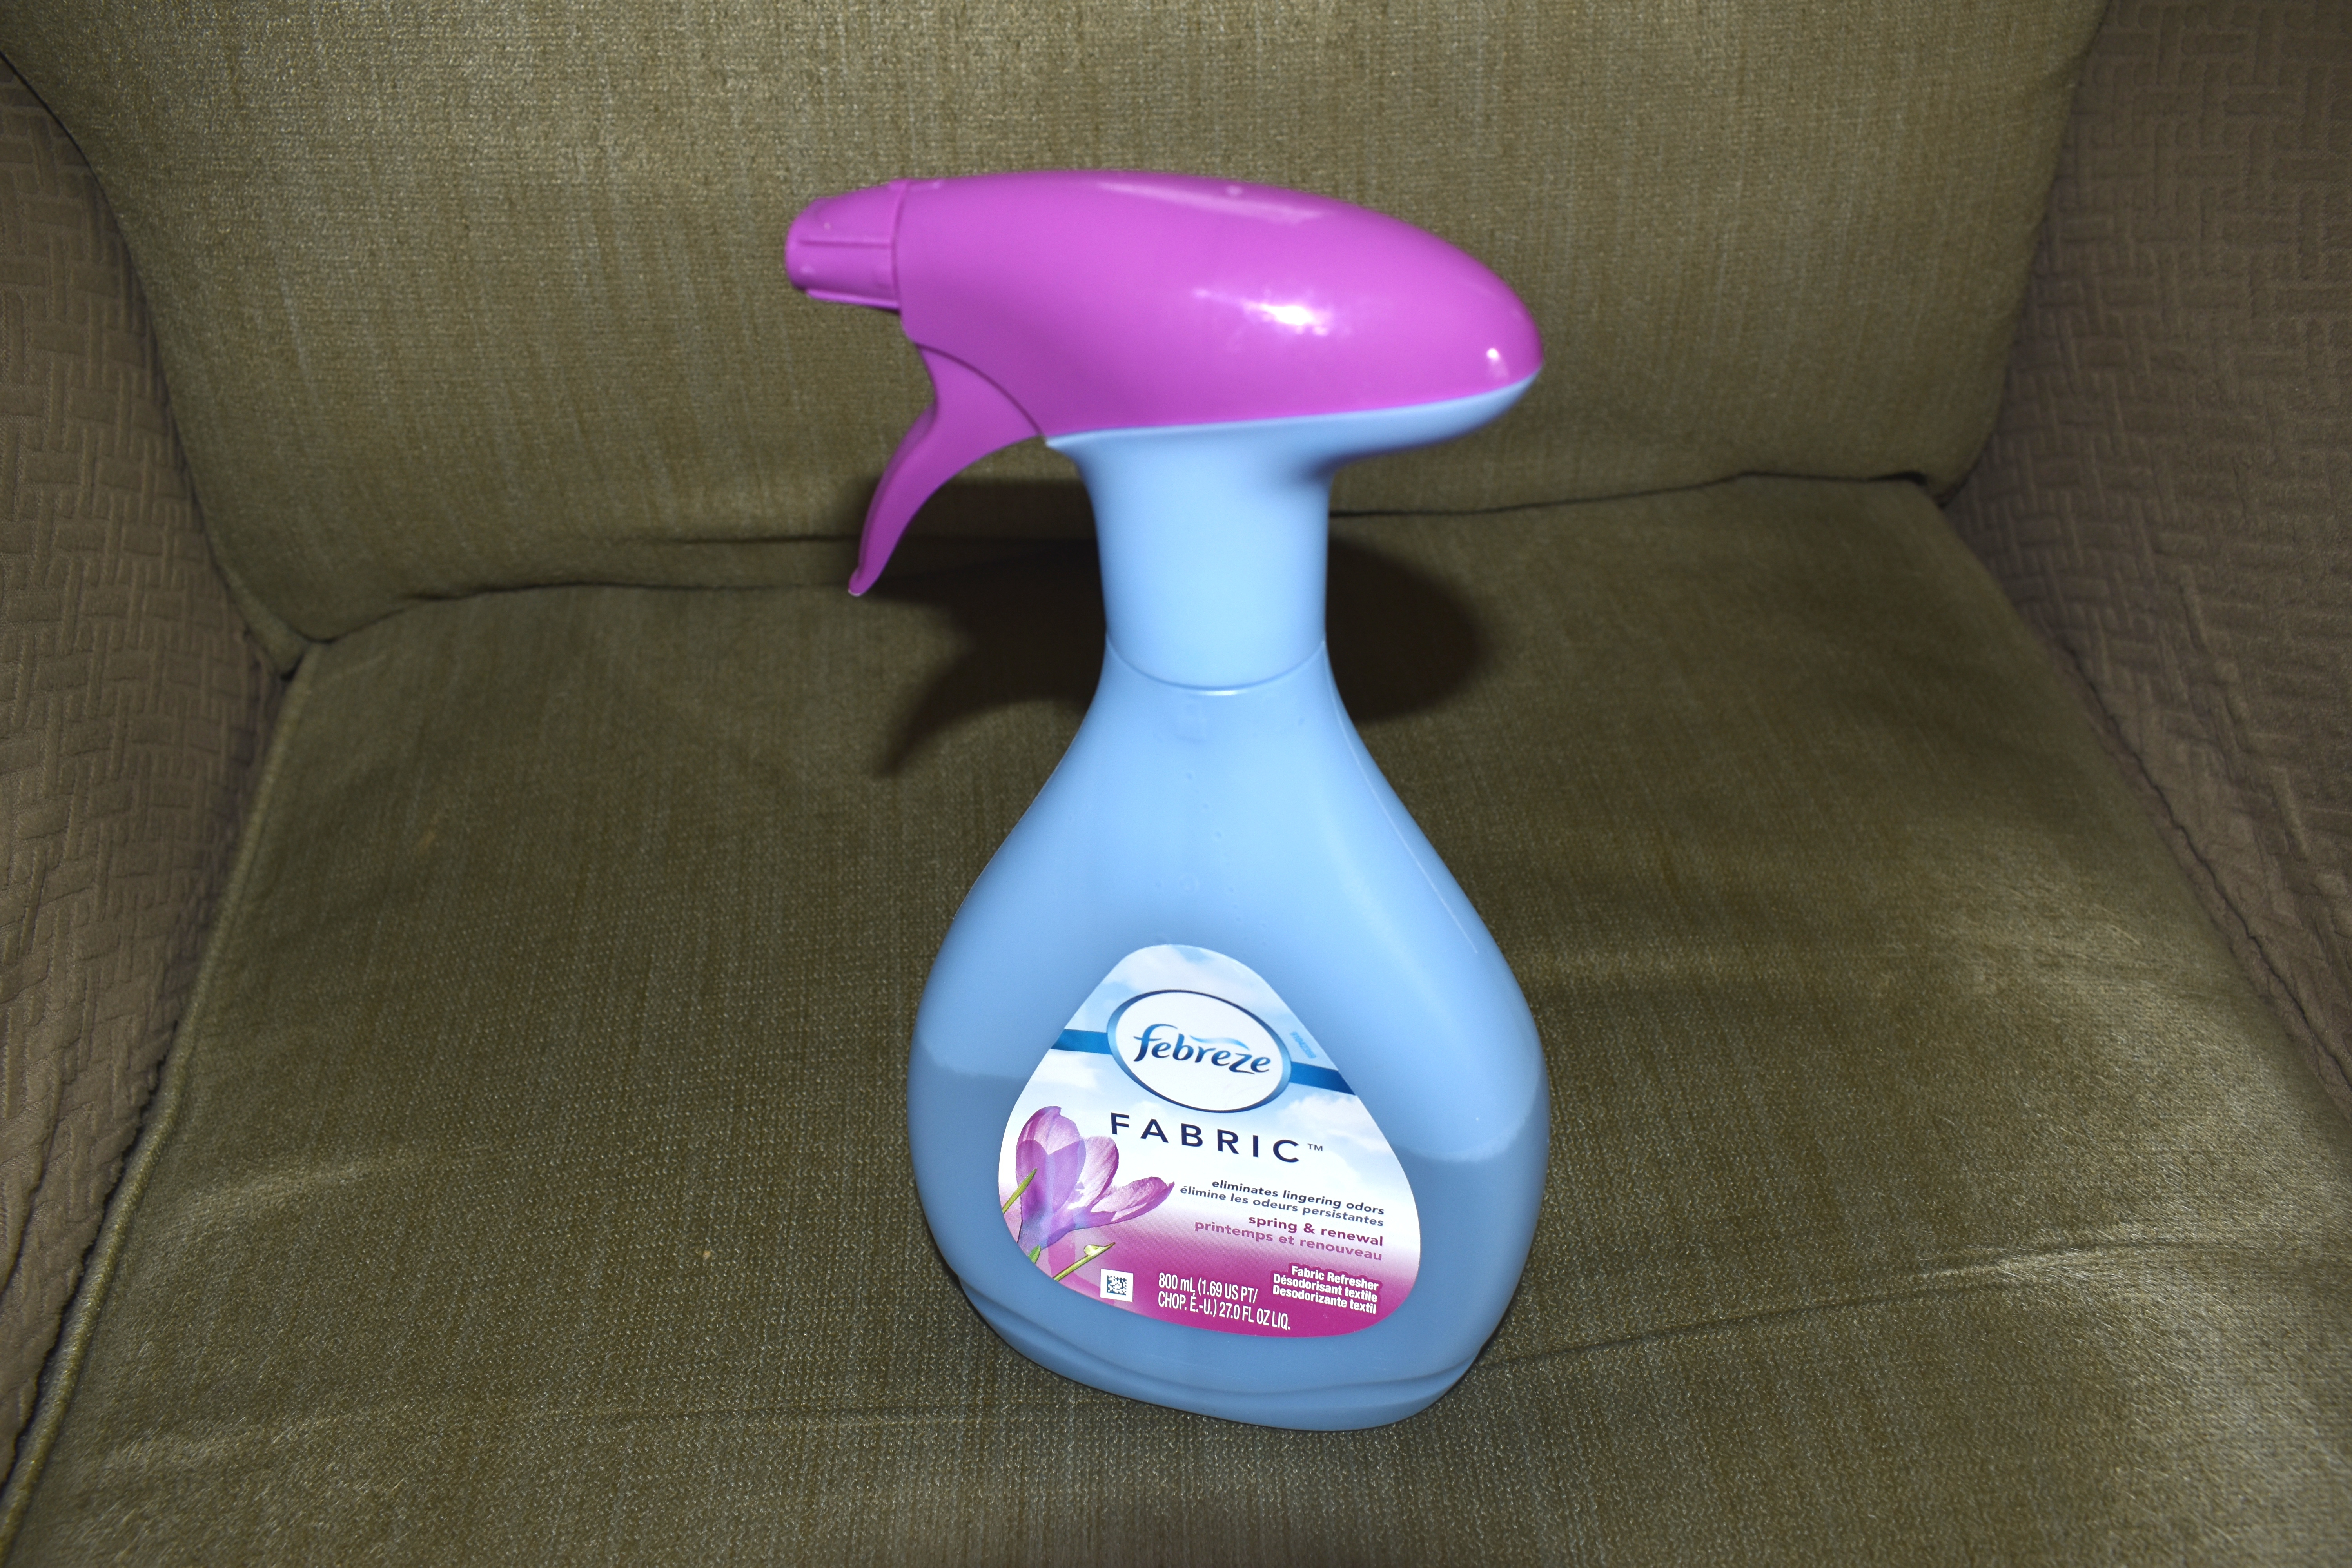 A used bottle of Febreze fabric freshener | Source: Shutterstock